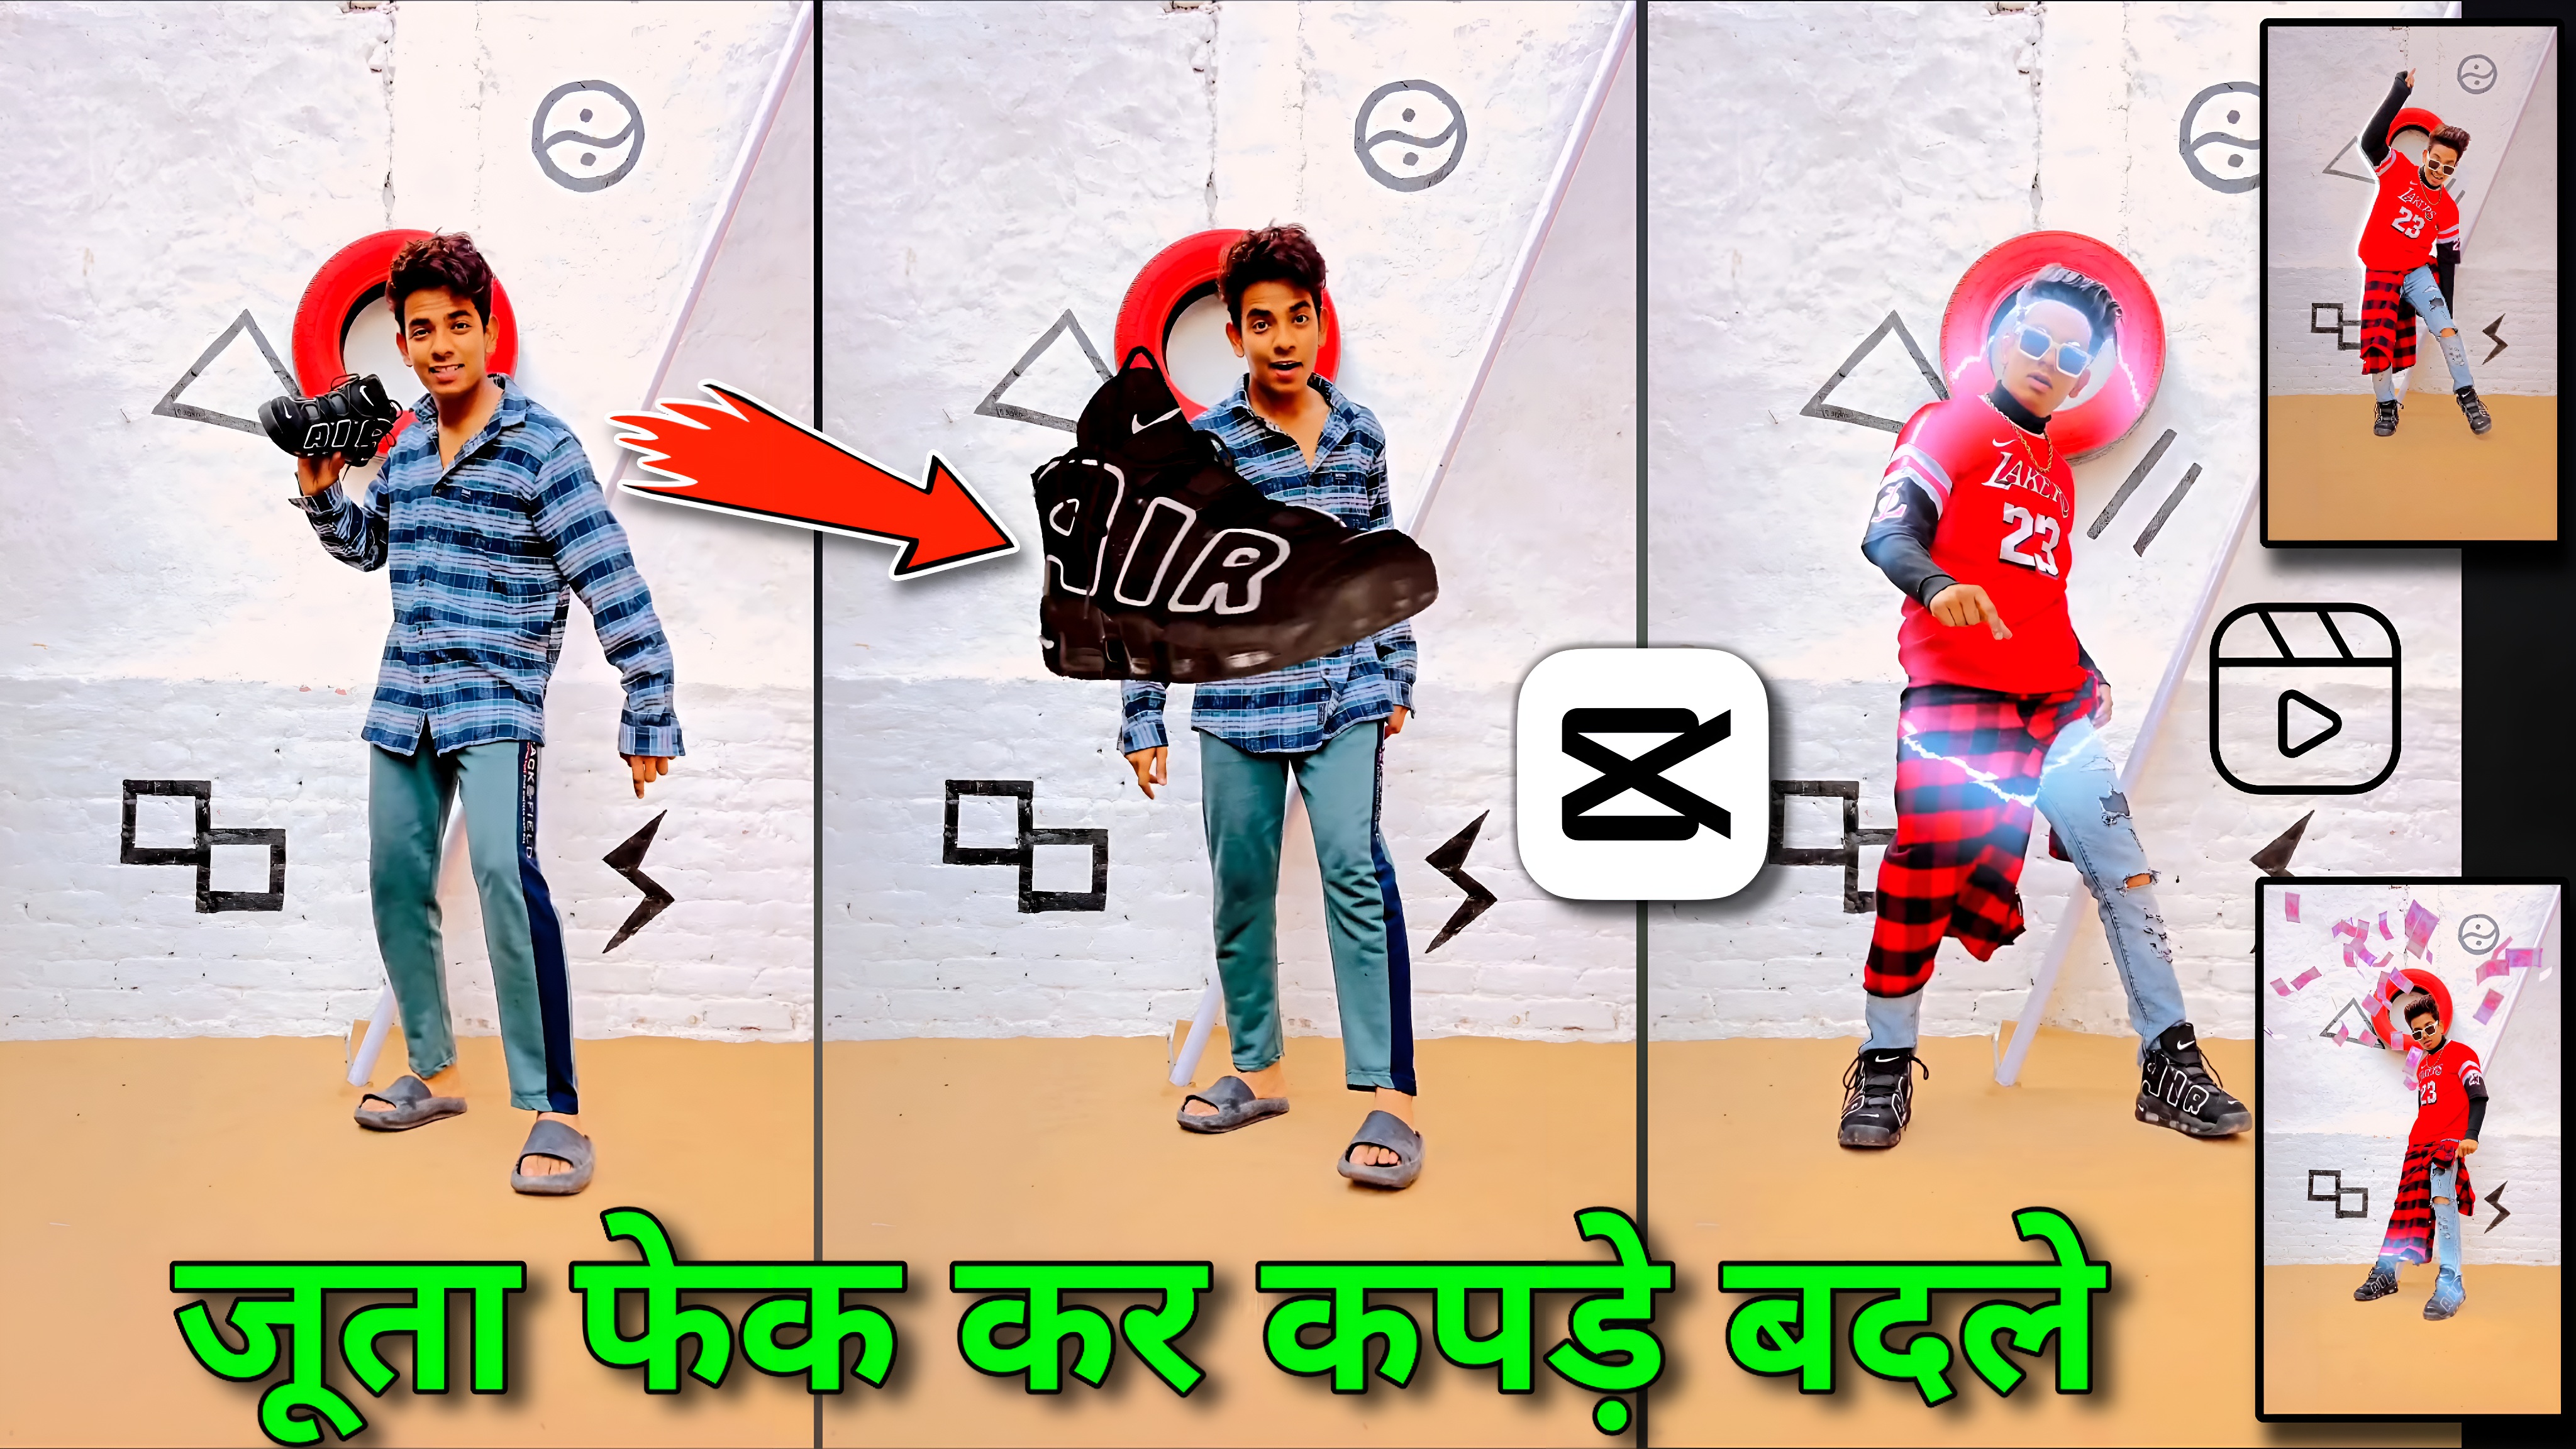 जूता फेक कर कपड़े बदले || Ek baar aaja aaja Kya bolti company || Cloth change video editing